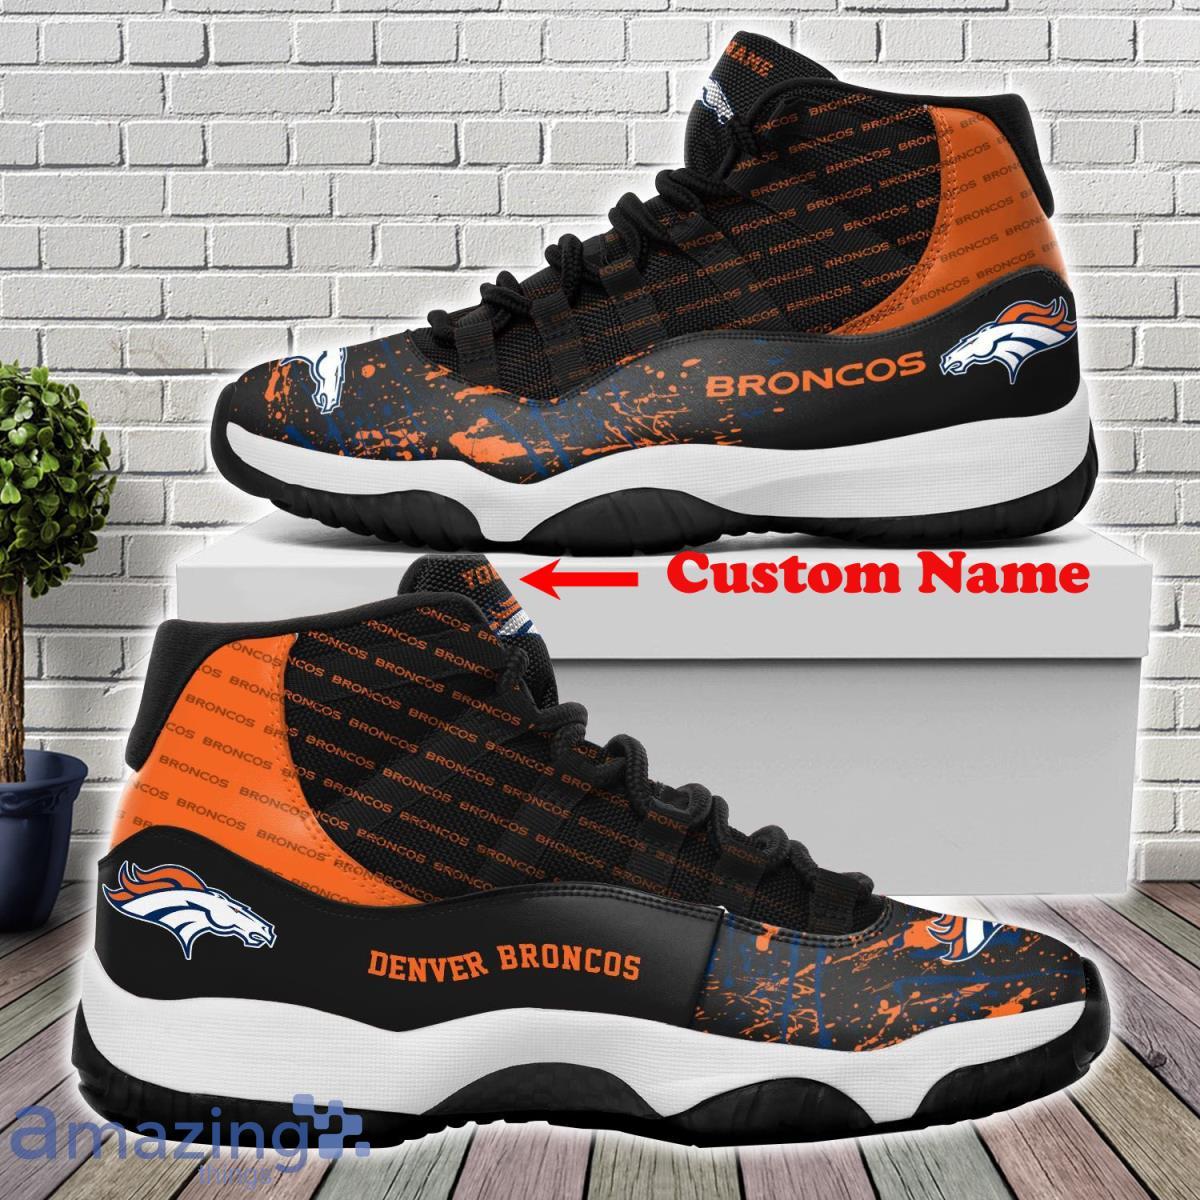 Denver Broncos Football Team Air Jordan 11 Custom Name Sneakers For Fans Product Photo 1